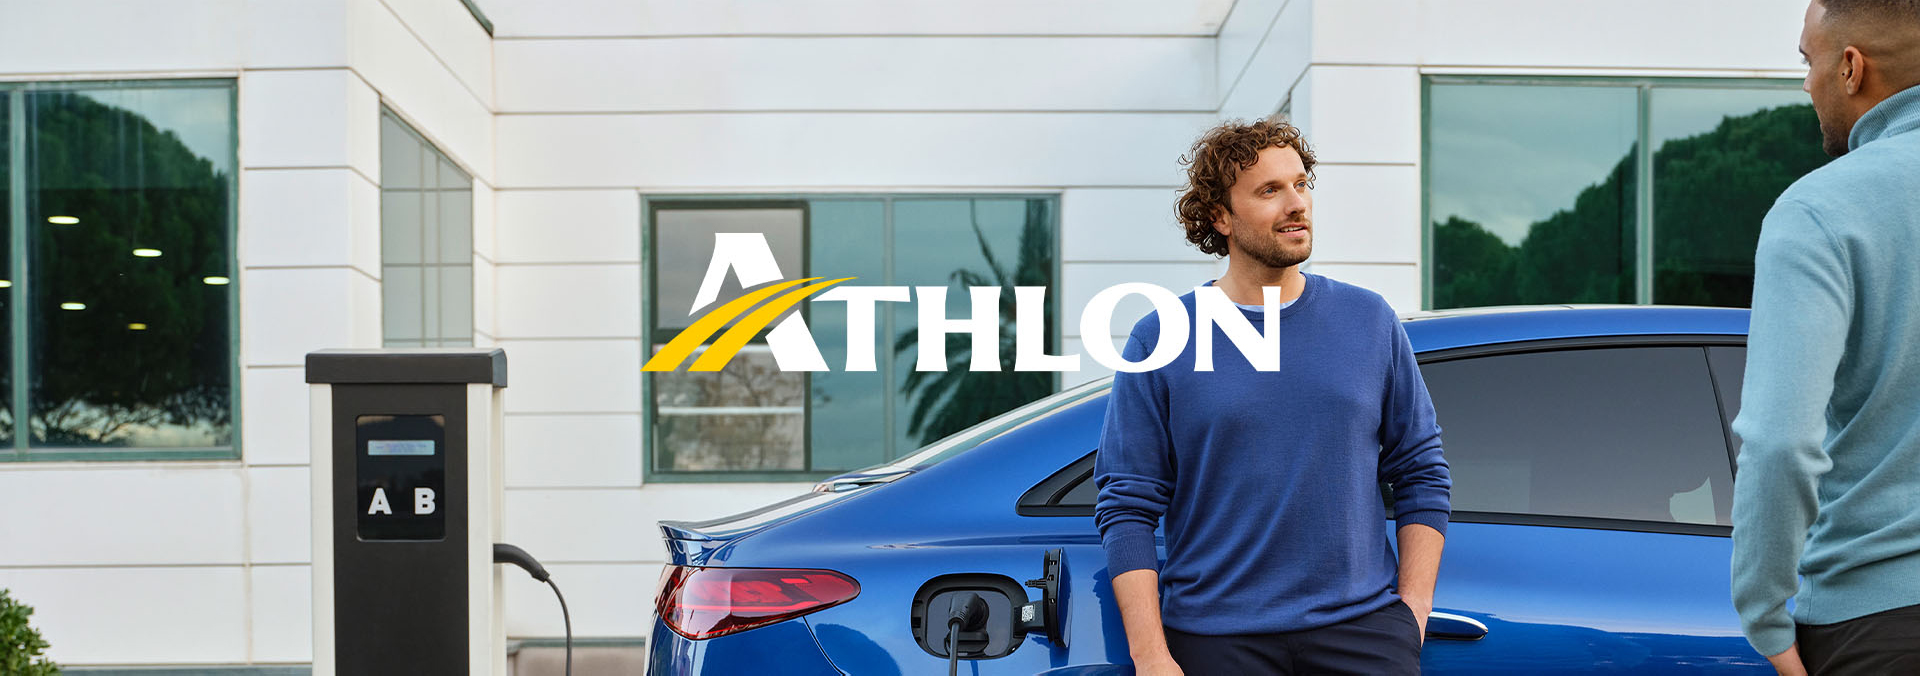 Marketing Kampagne Athlon Header